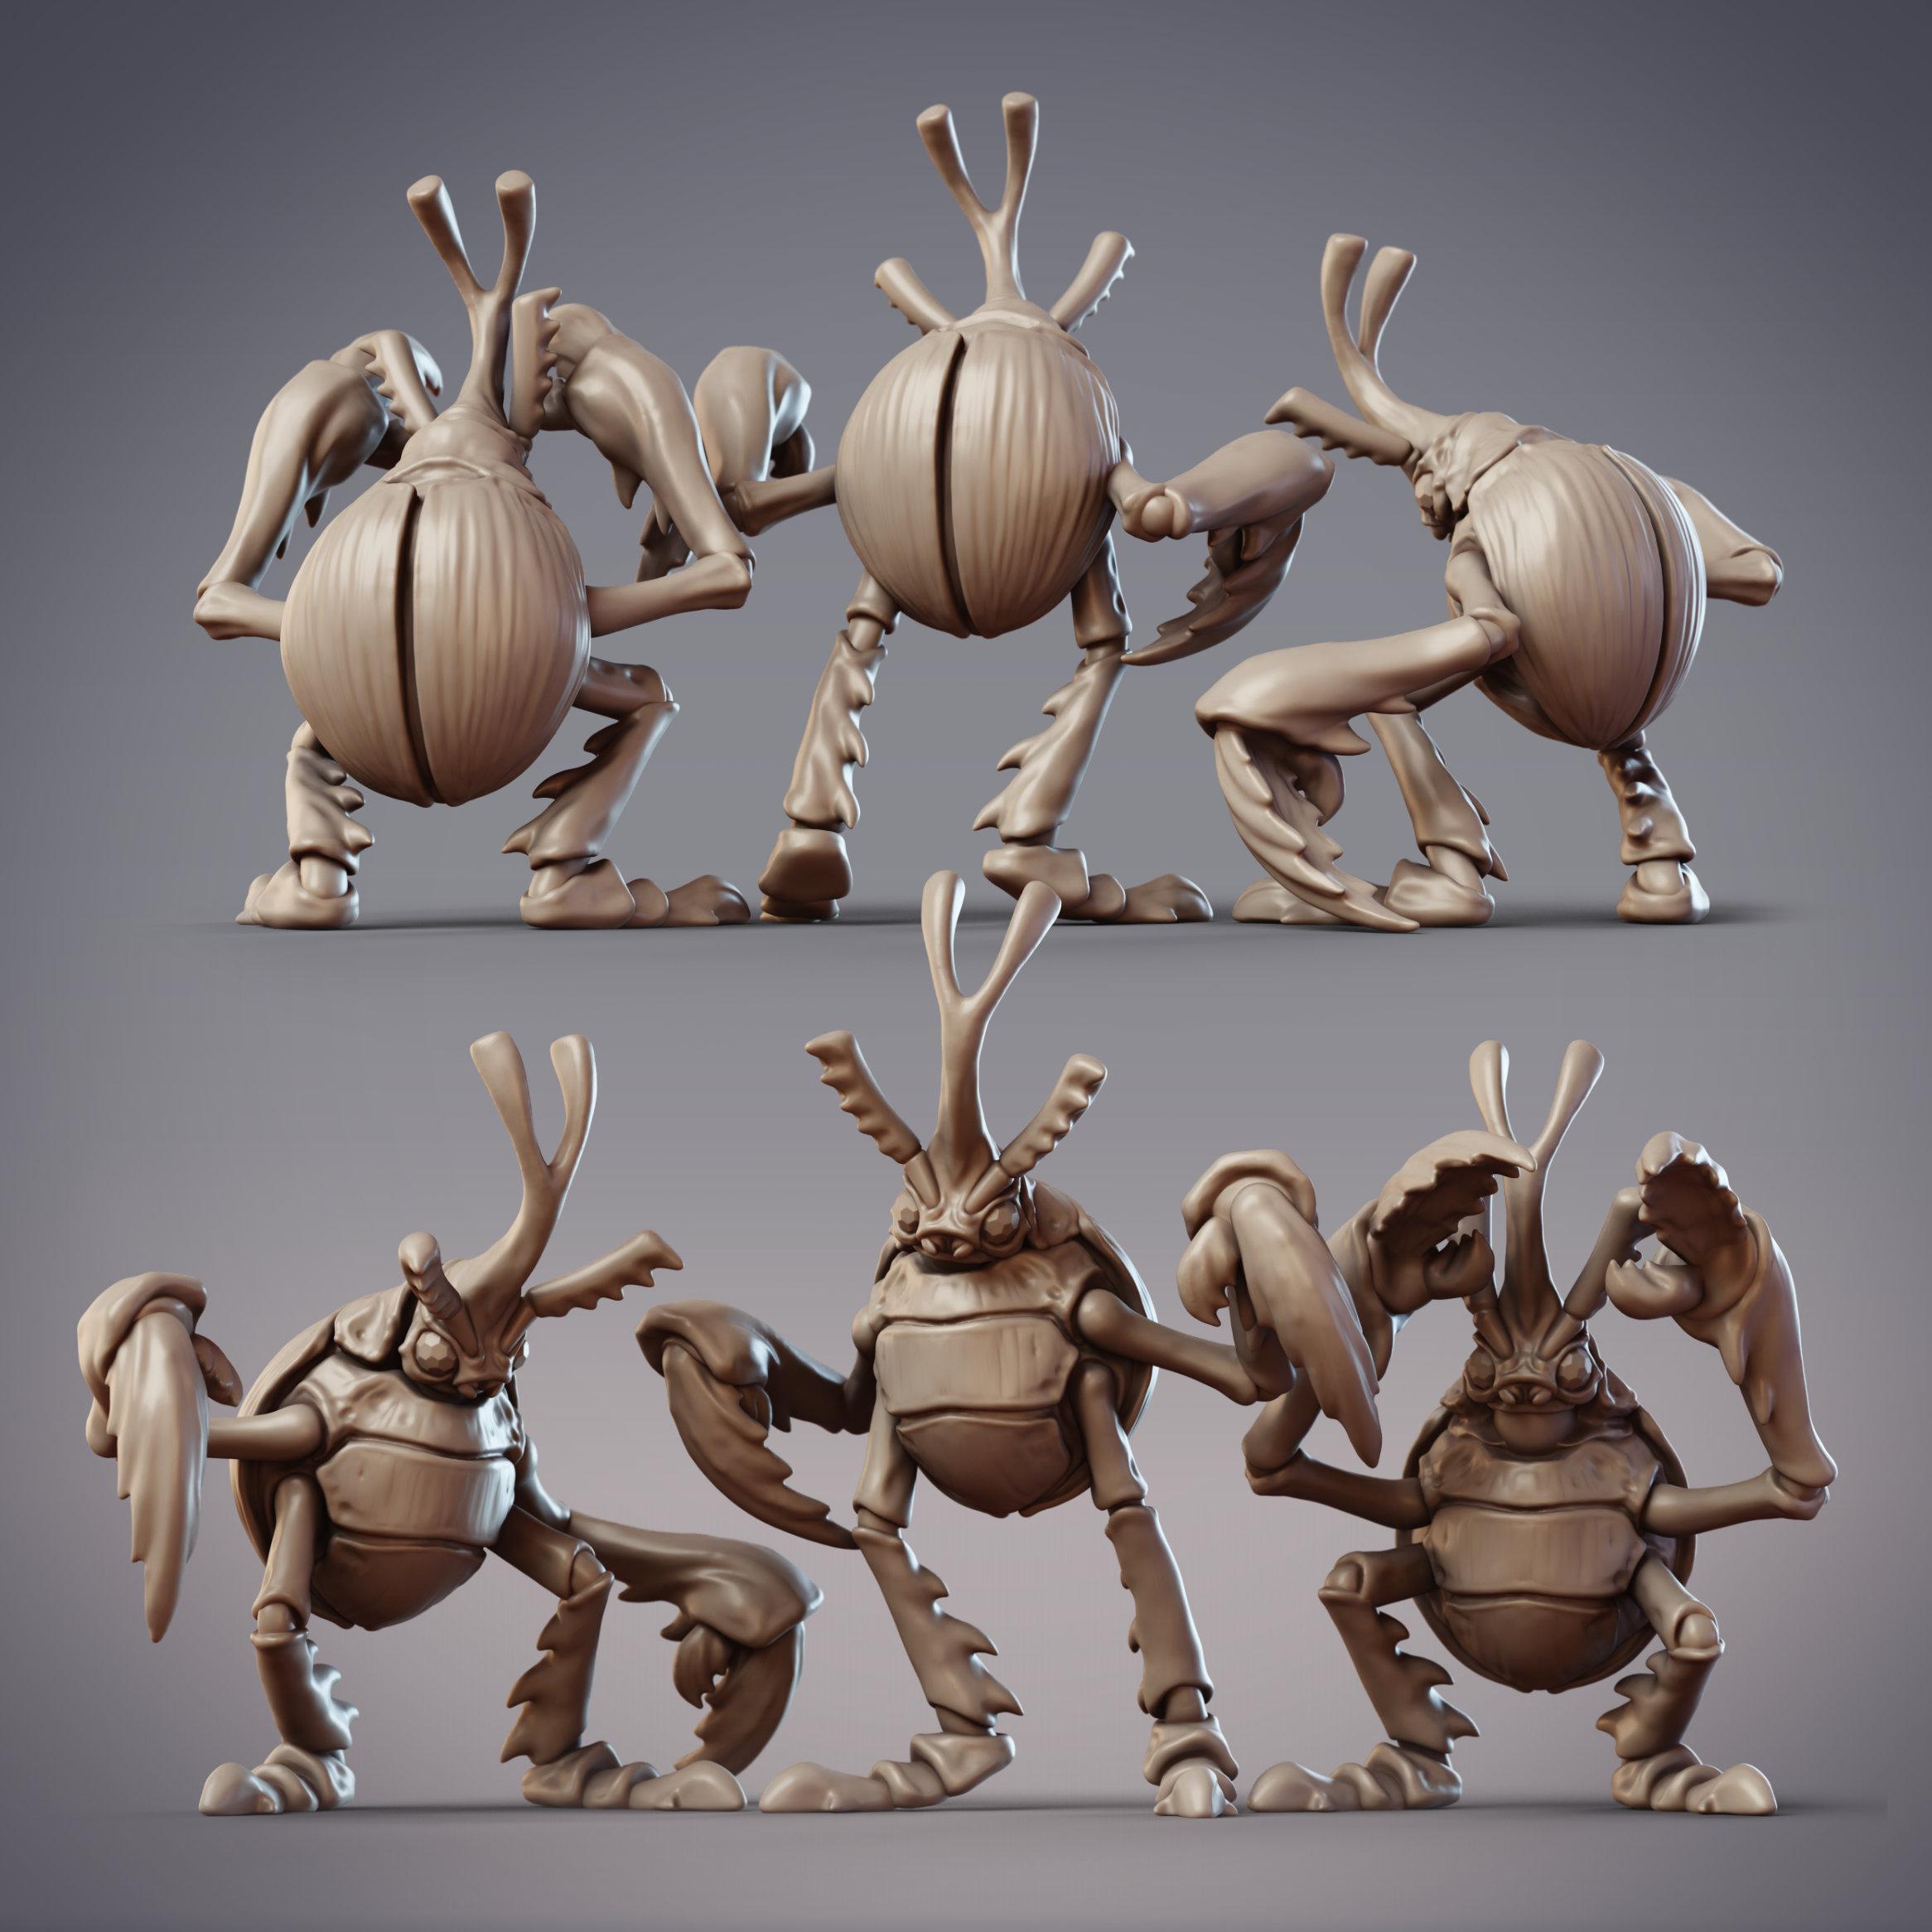 Beetle Boys Crew - Vireo, Rubus, & Foli, Antenari Folk (Pre-supported) 3d model